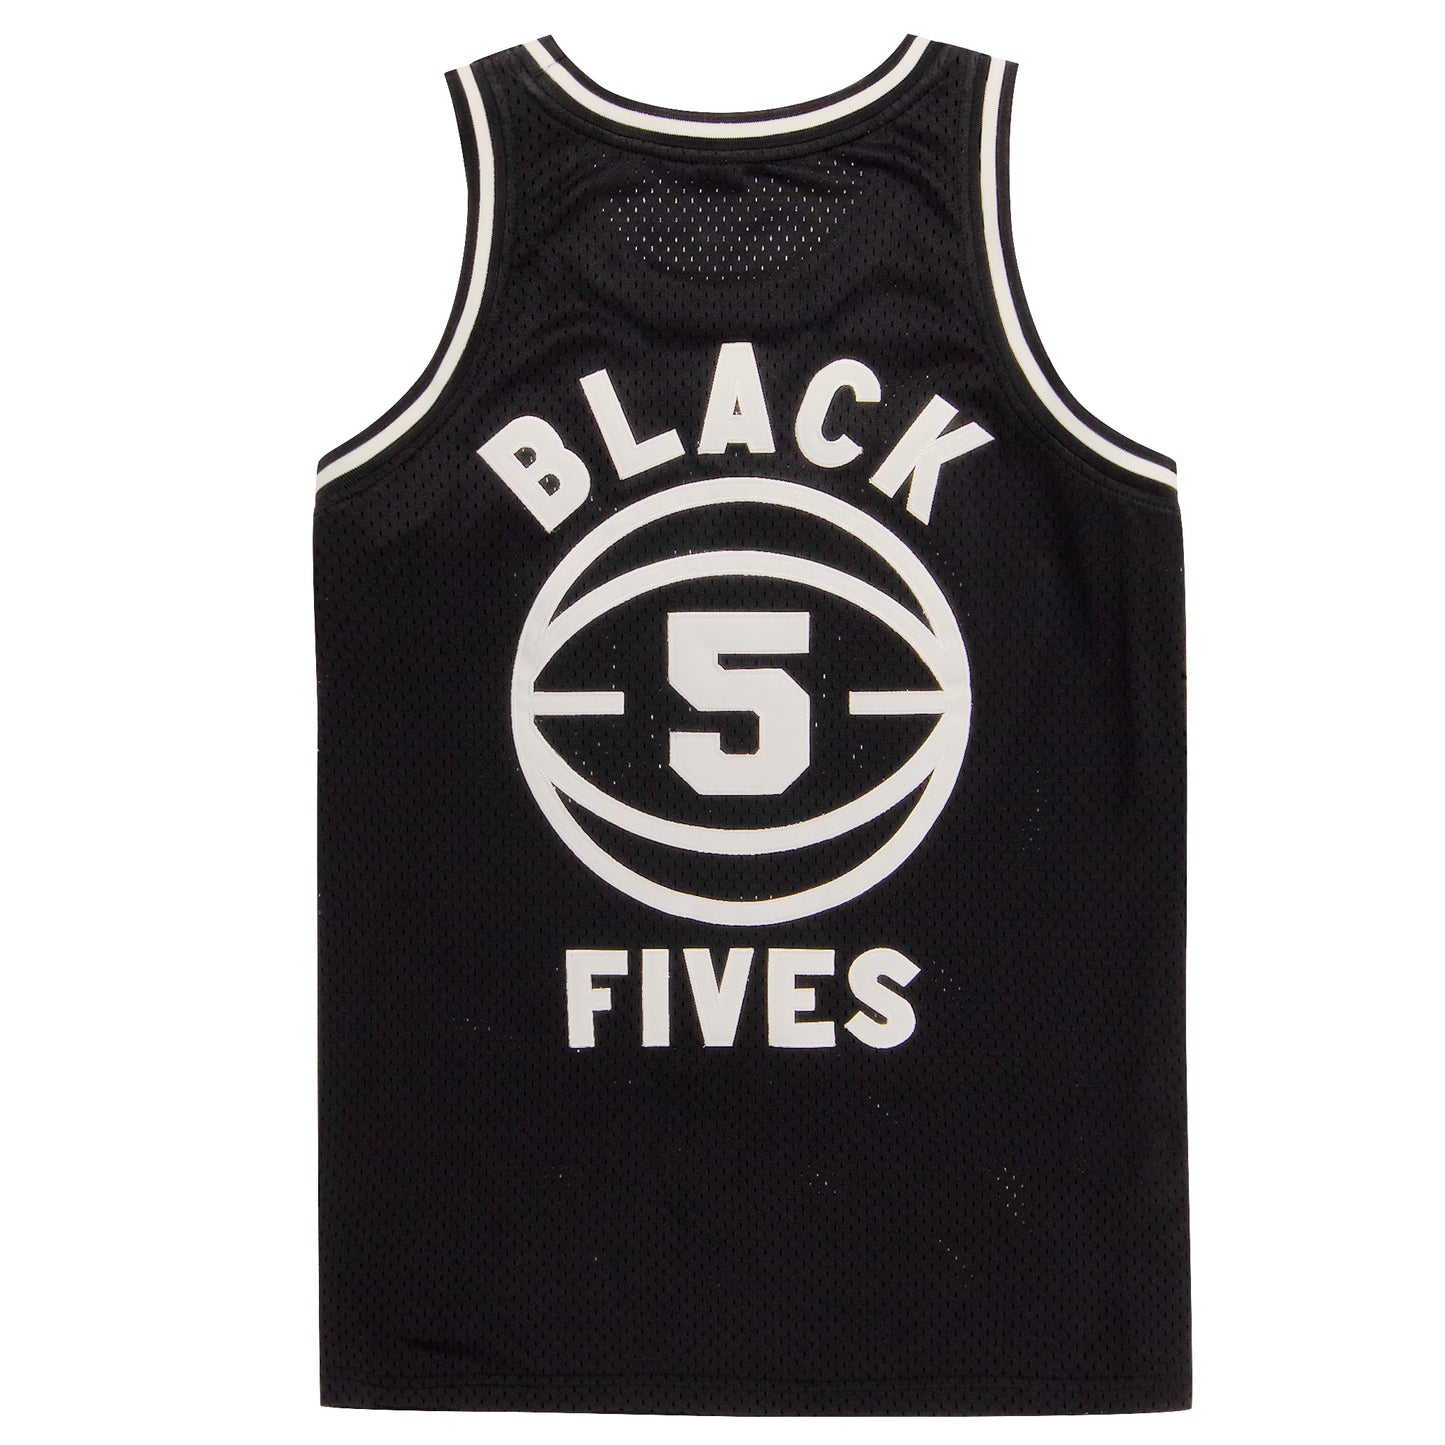 Black Fives Basketball Jersey